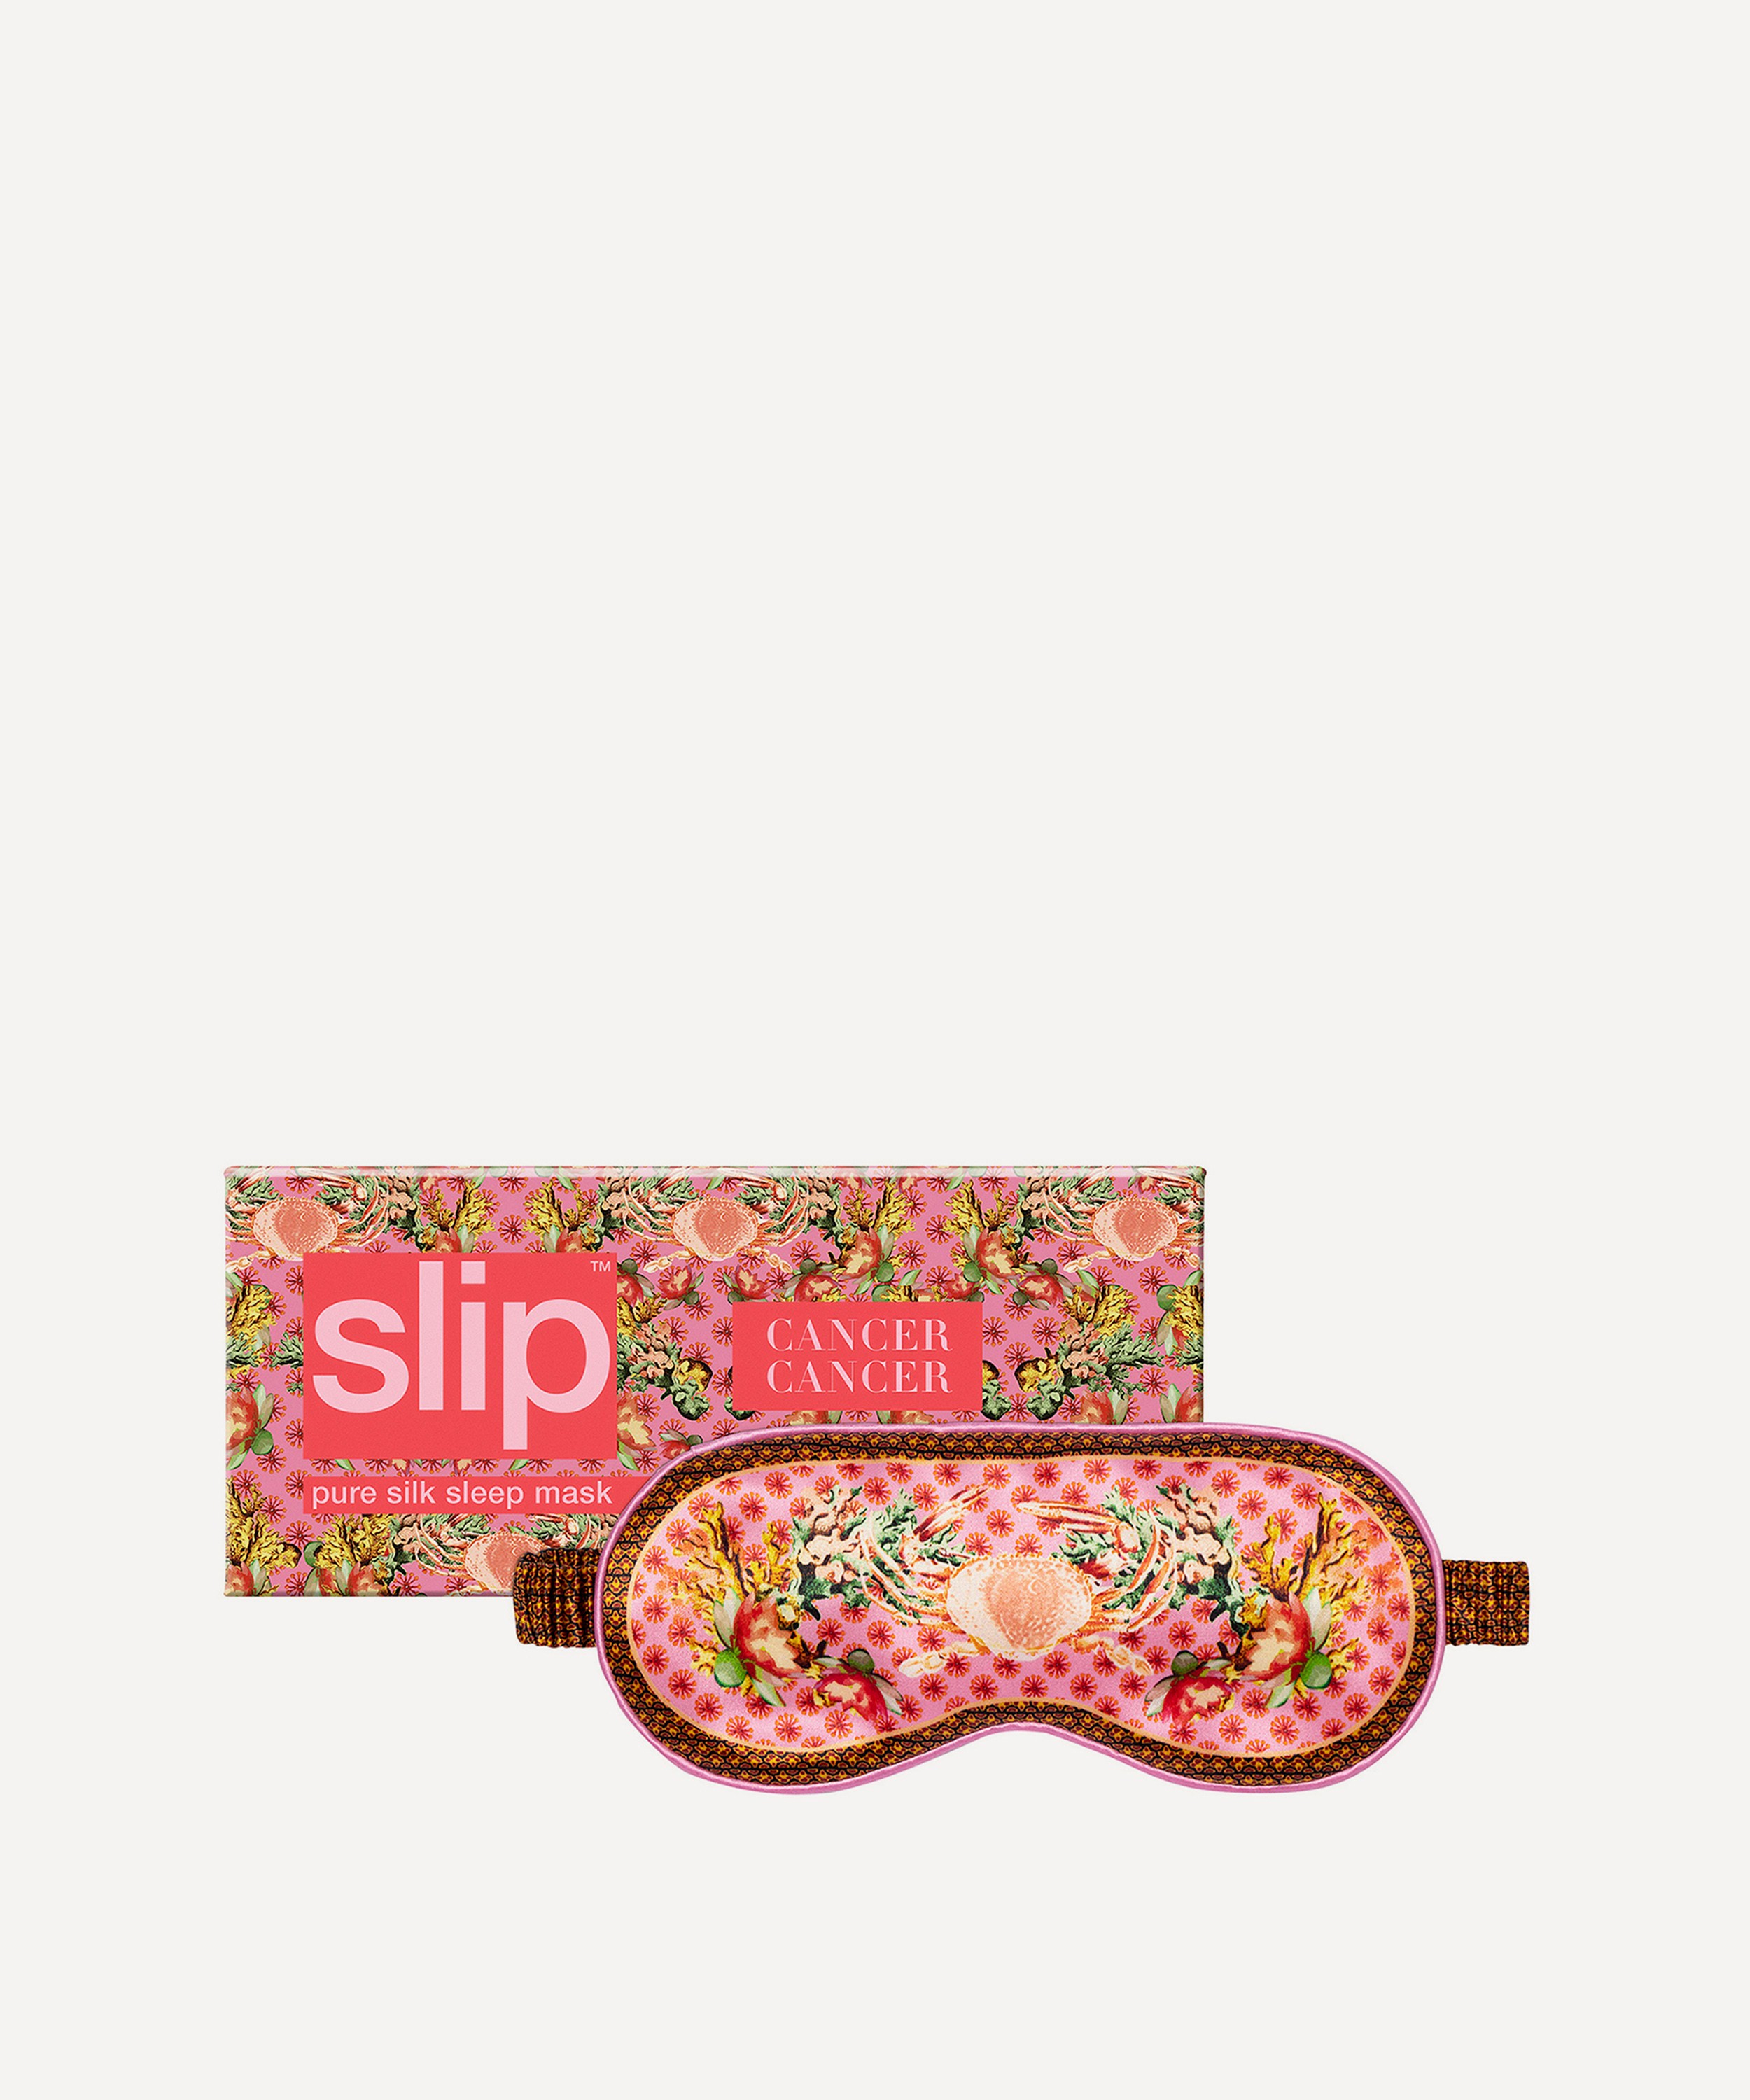 Slip - Cancer Silk Sleep Mask image number 0